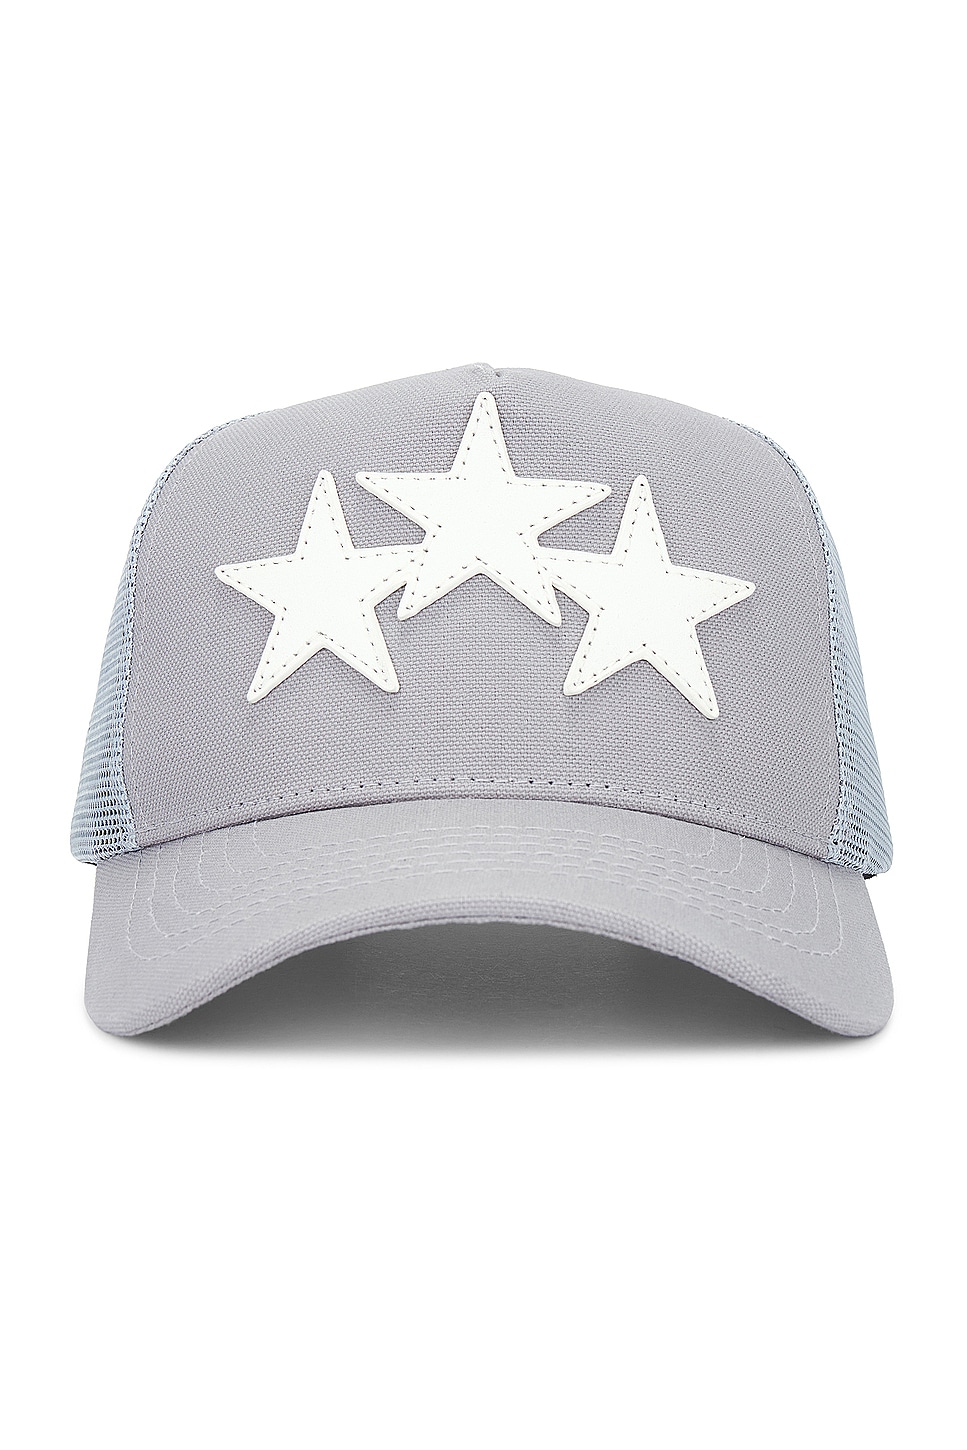 Amiri Three Star Trucker Hat in Grey